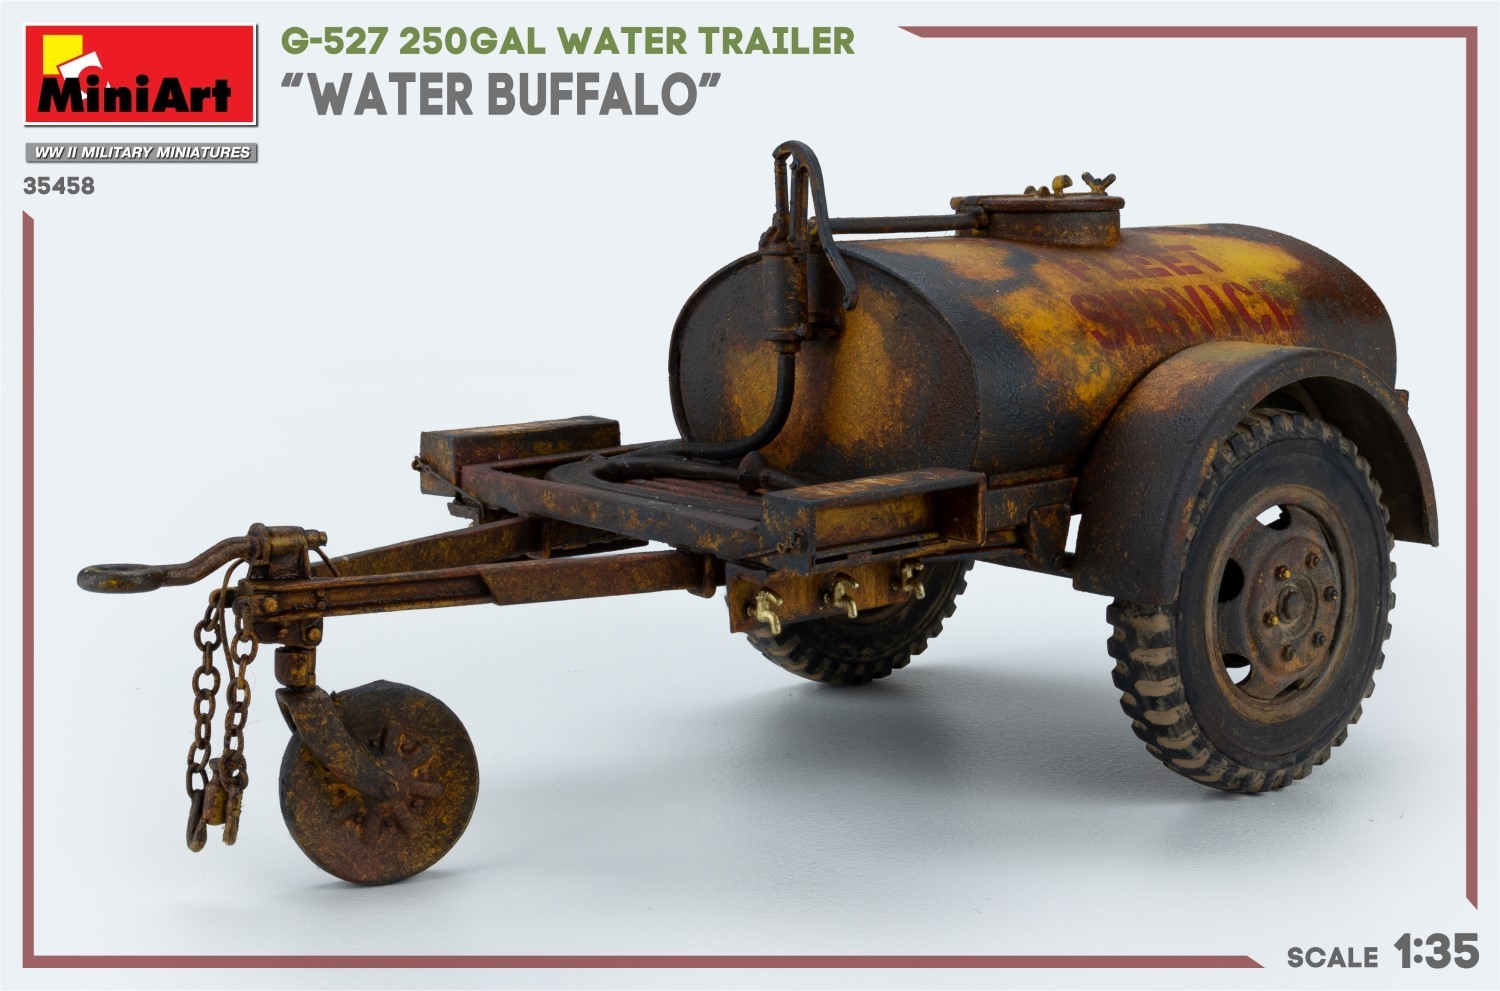 MiniArt G-527 250GAL Water Trailer “Water Buffalo” Rust Paint-2